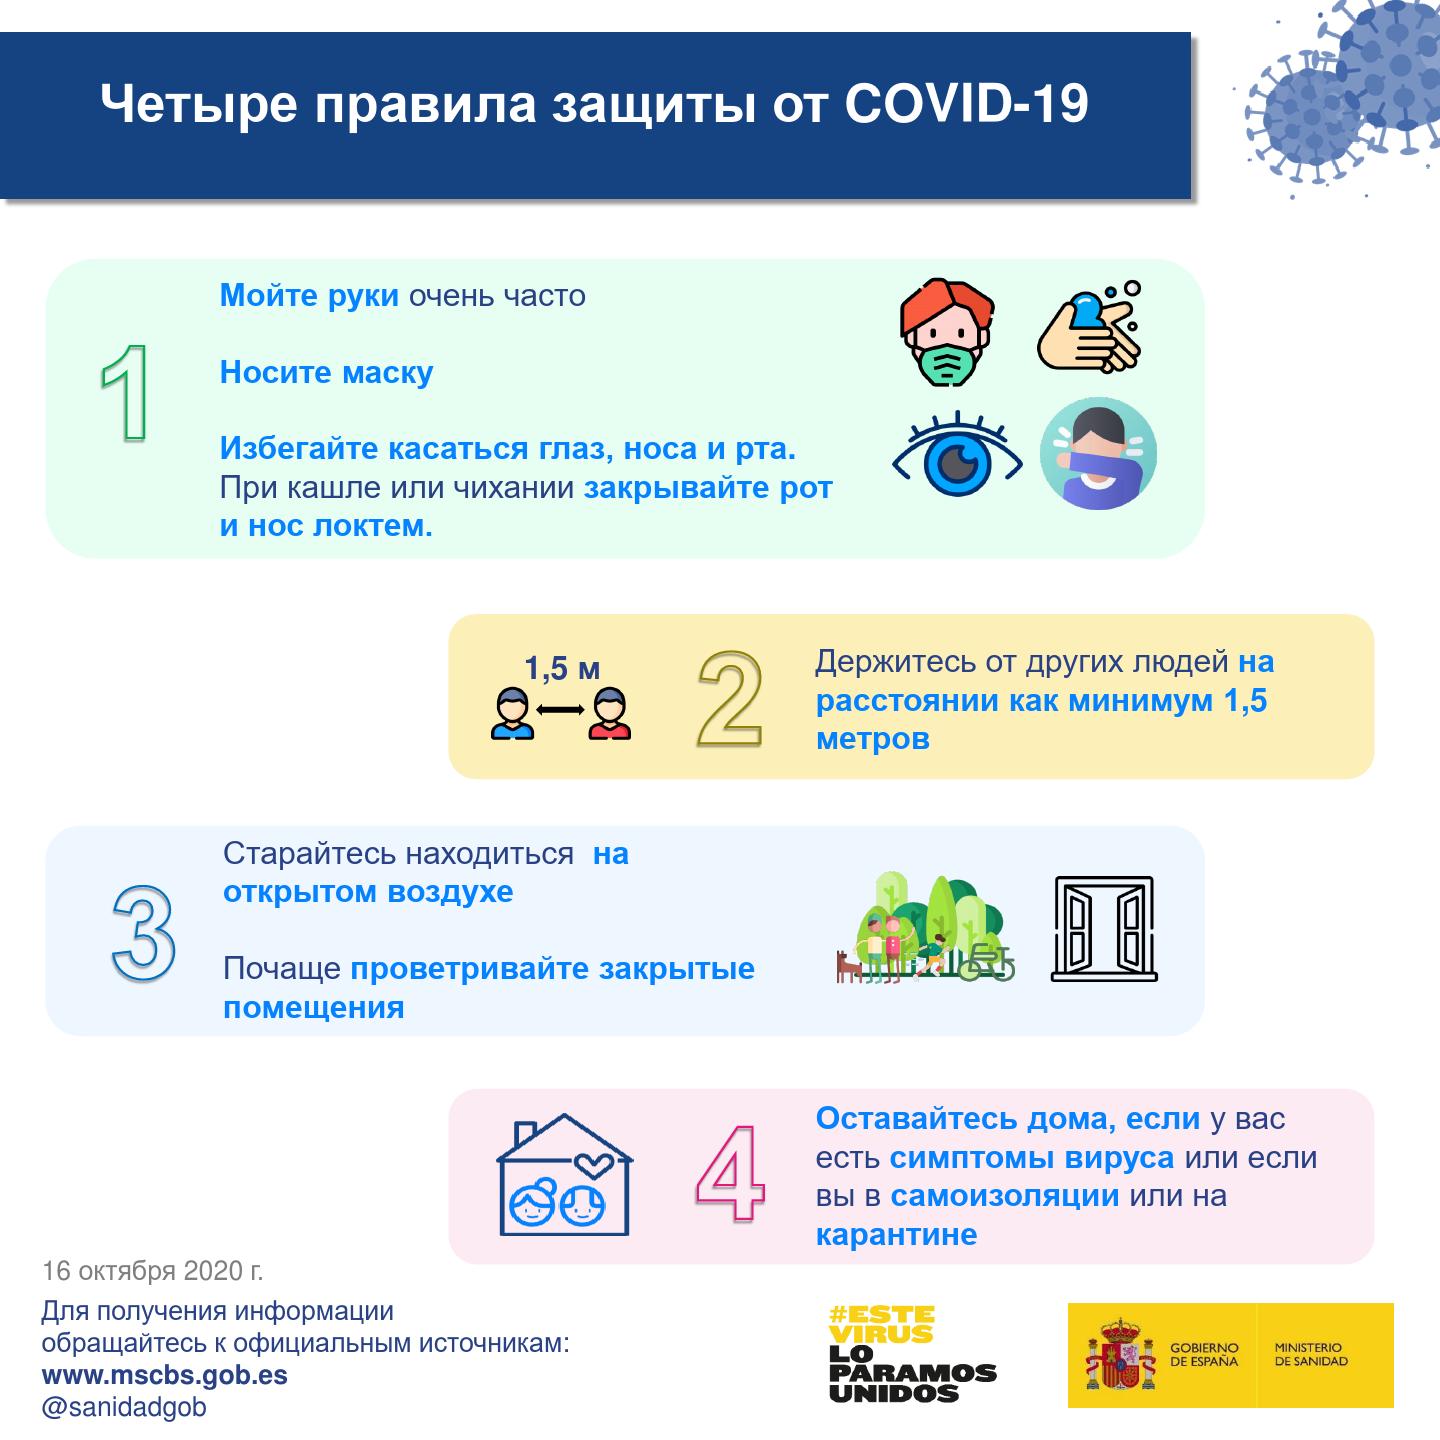 Четыре правила защиты от COVID-19